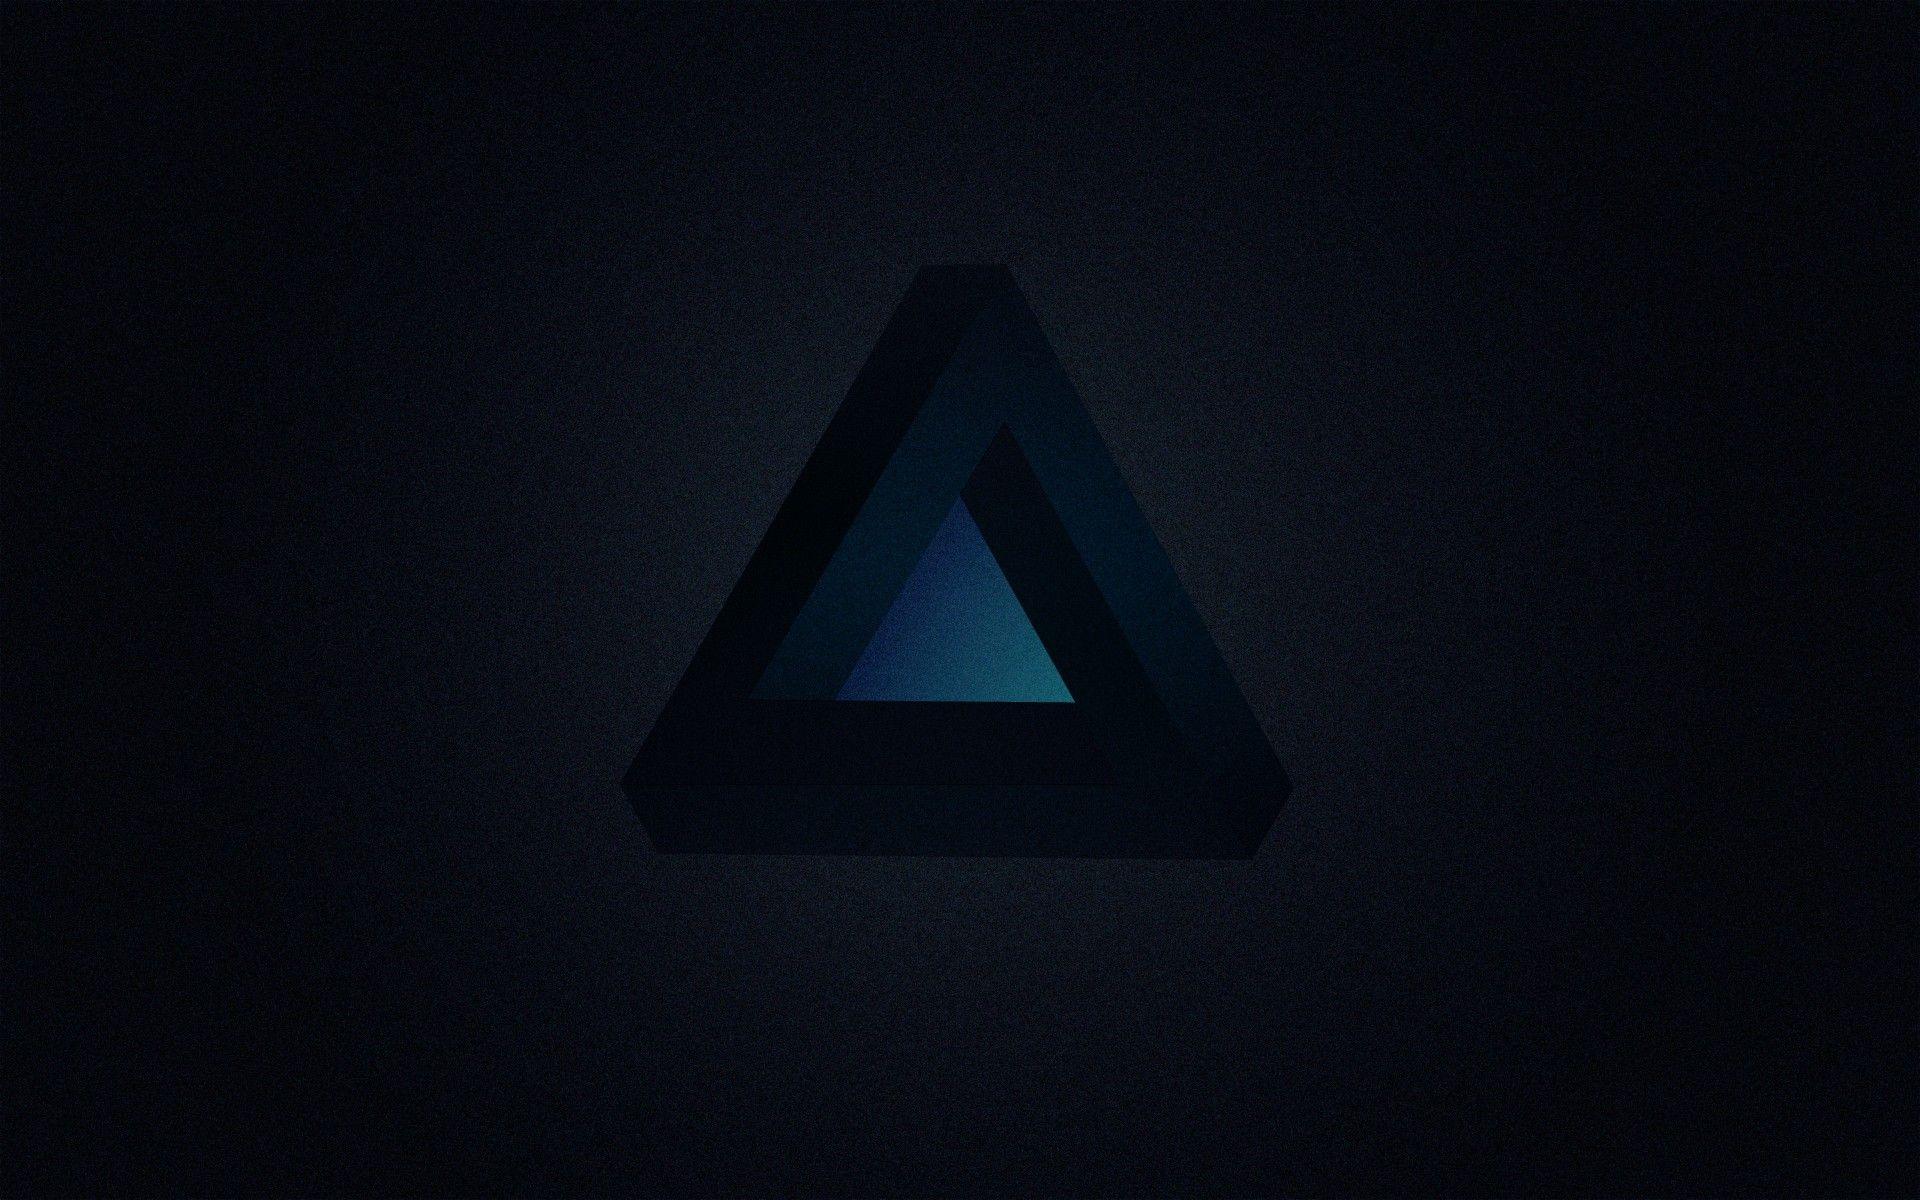 Black and Blue Triangle Logo - Wallpaper : black, digital art, simple background, dark, minimalism